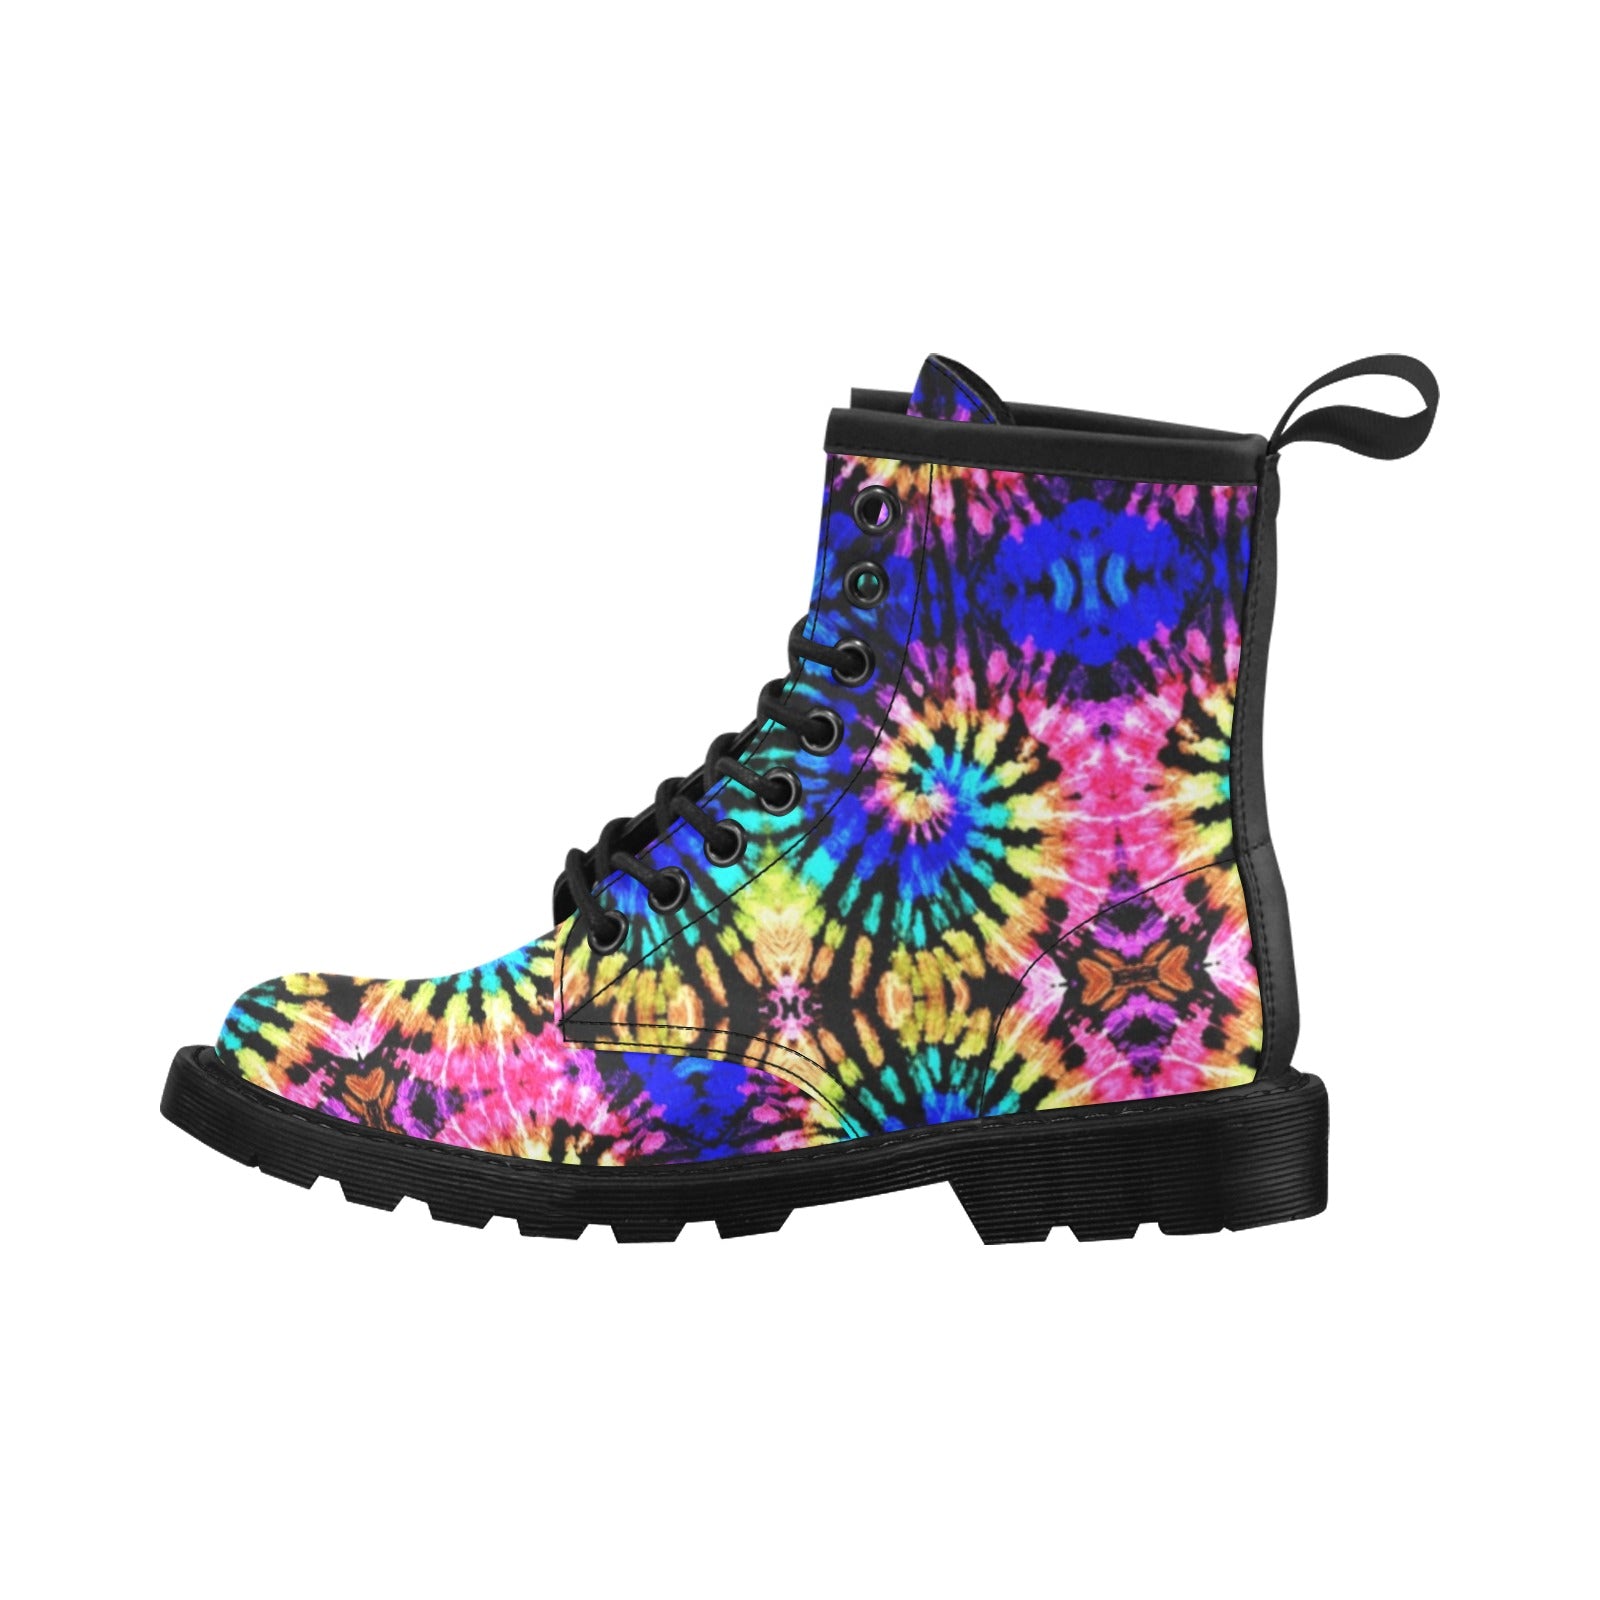 Tie Dye Rainbow Design Print Women's Boots